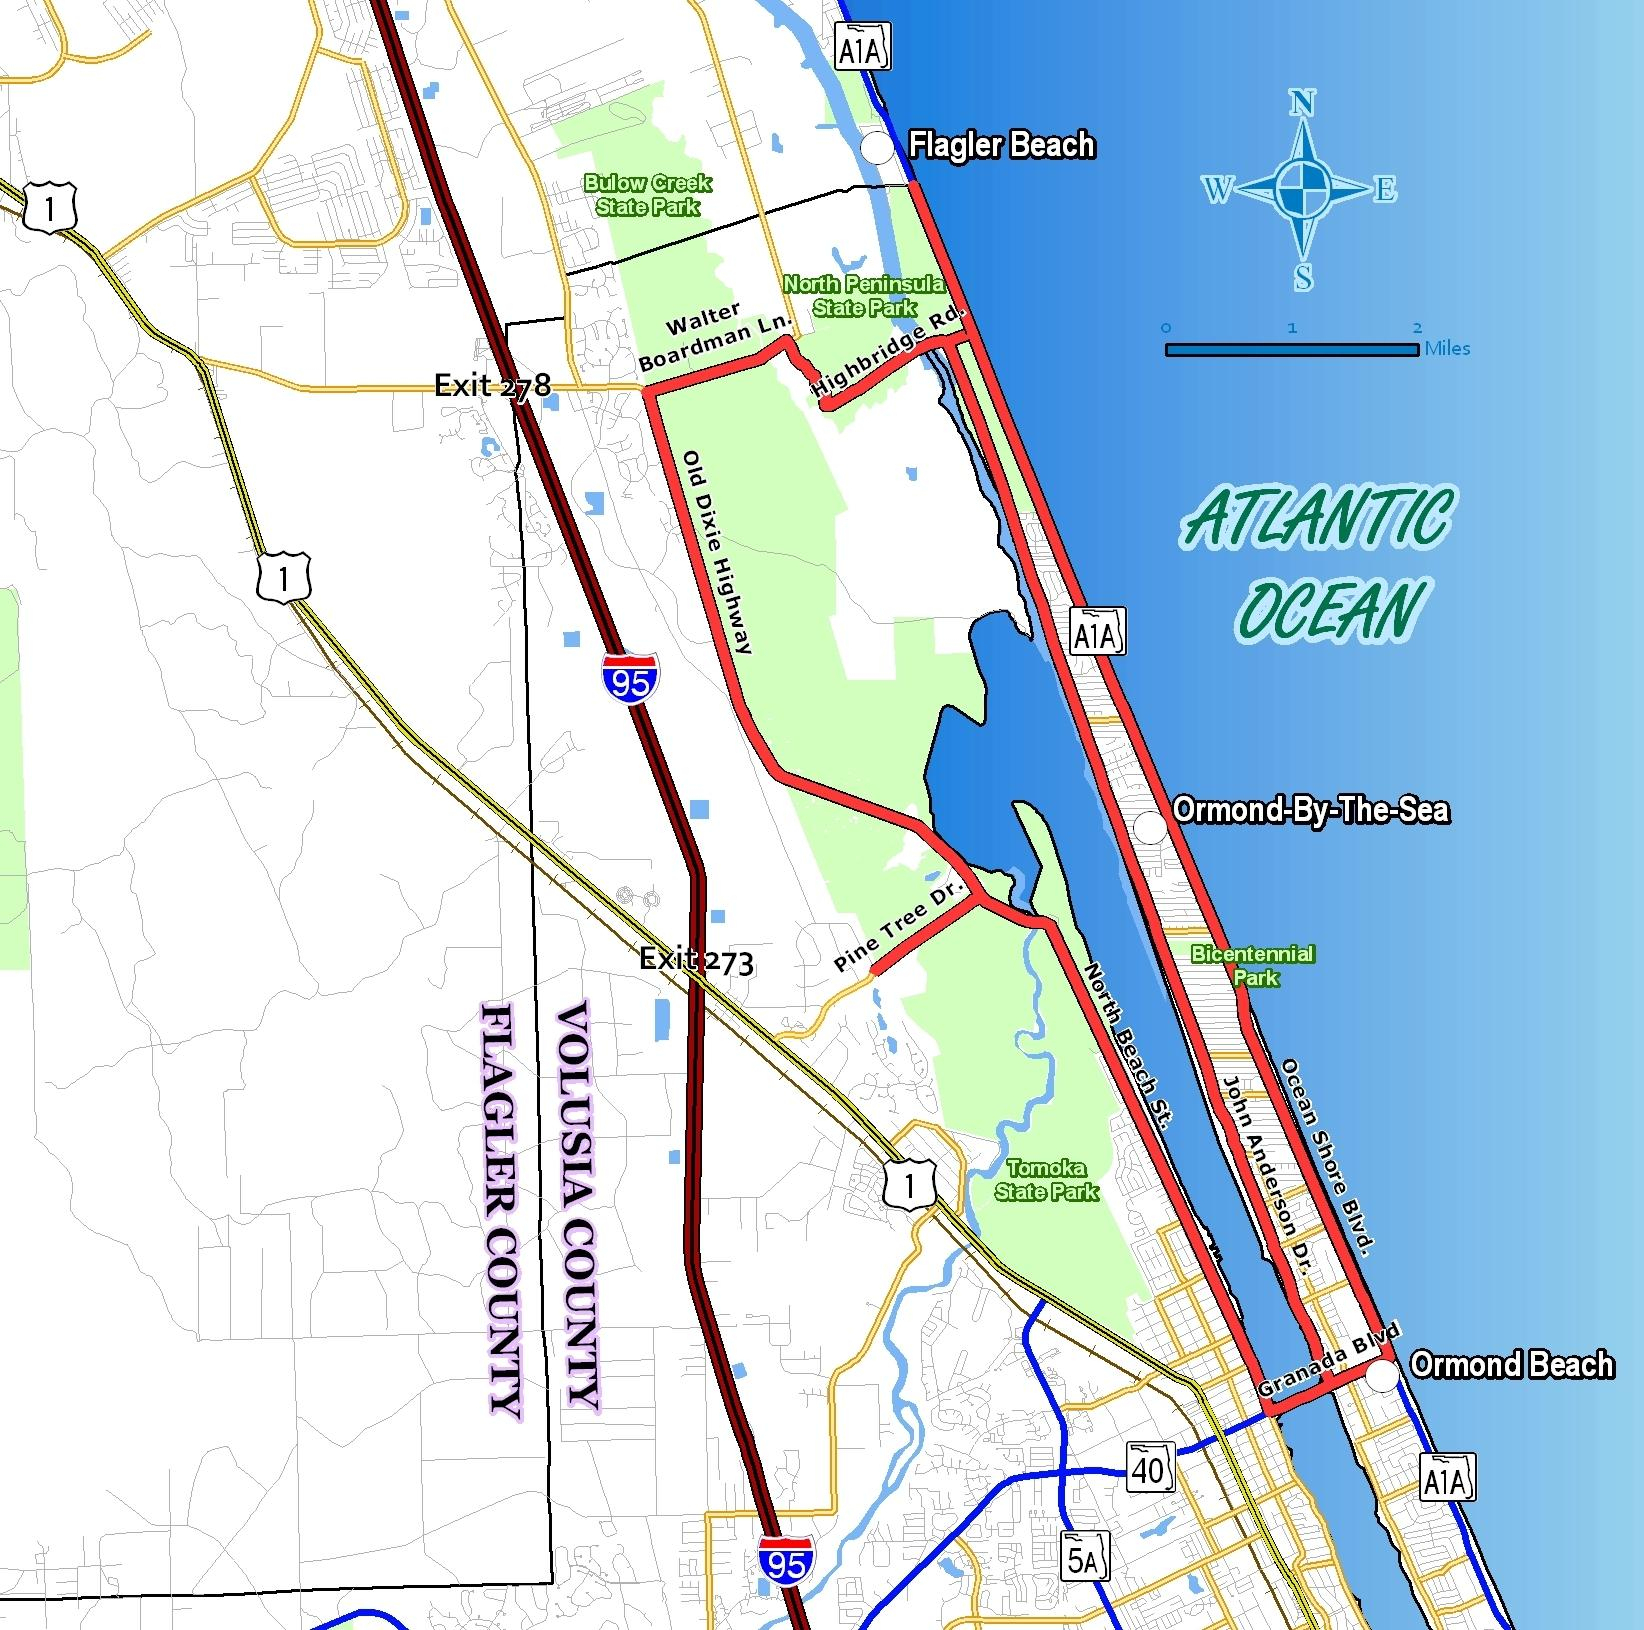 Oslt Index - Where Is Daytona Beach Florida On The Map